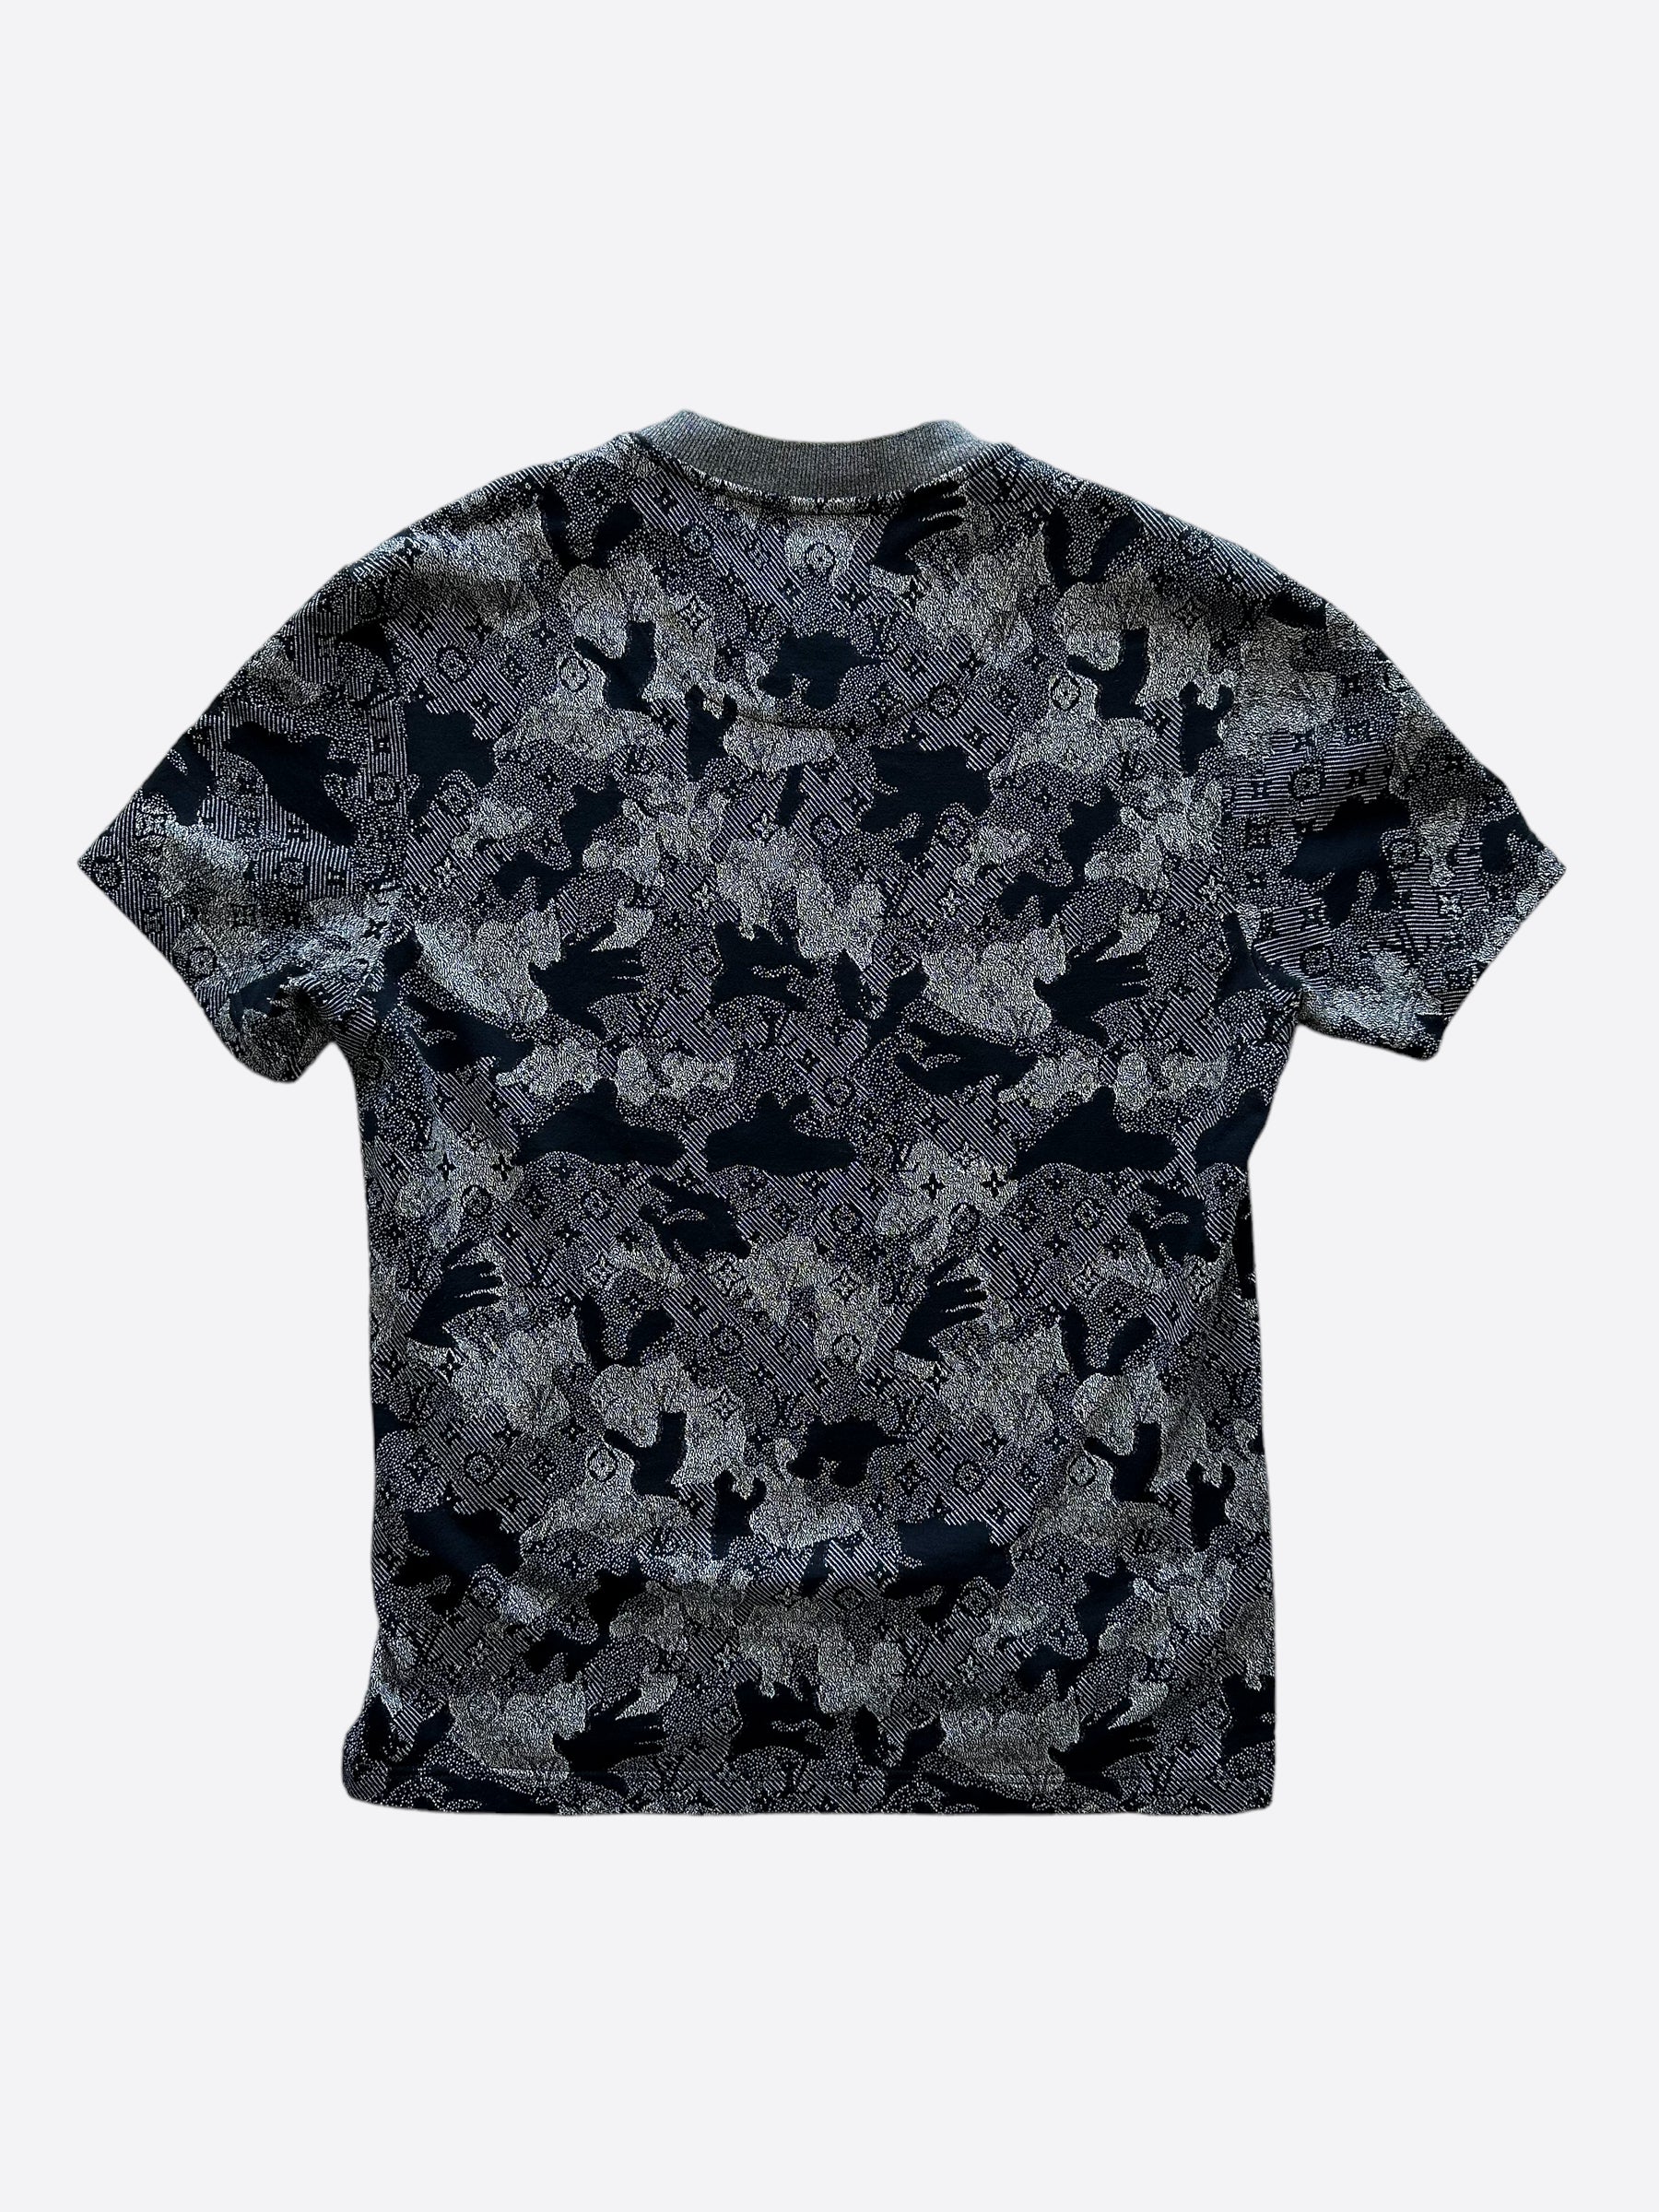 Louis Vuitton Grey Camouflage Monogram T-Shirt